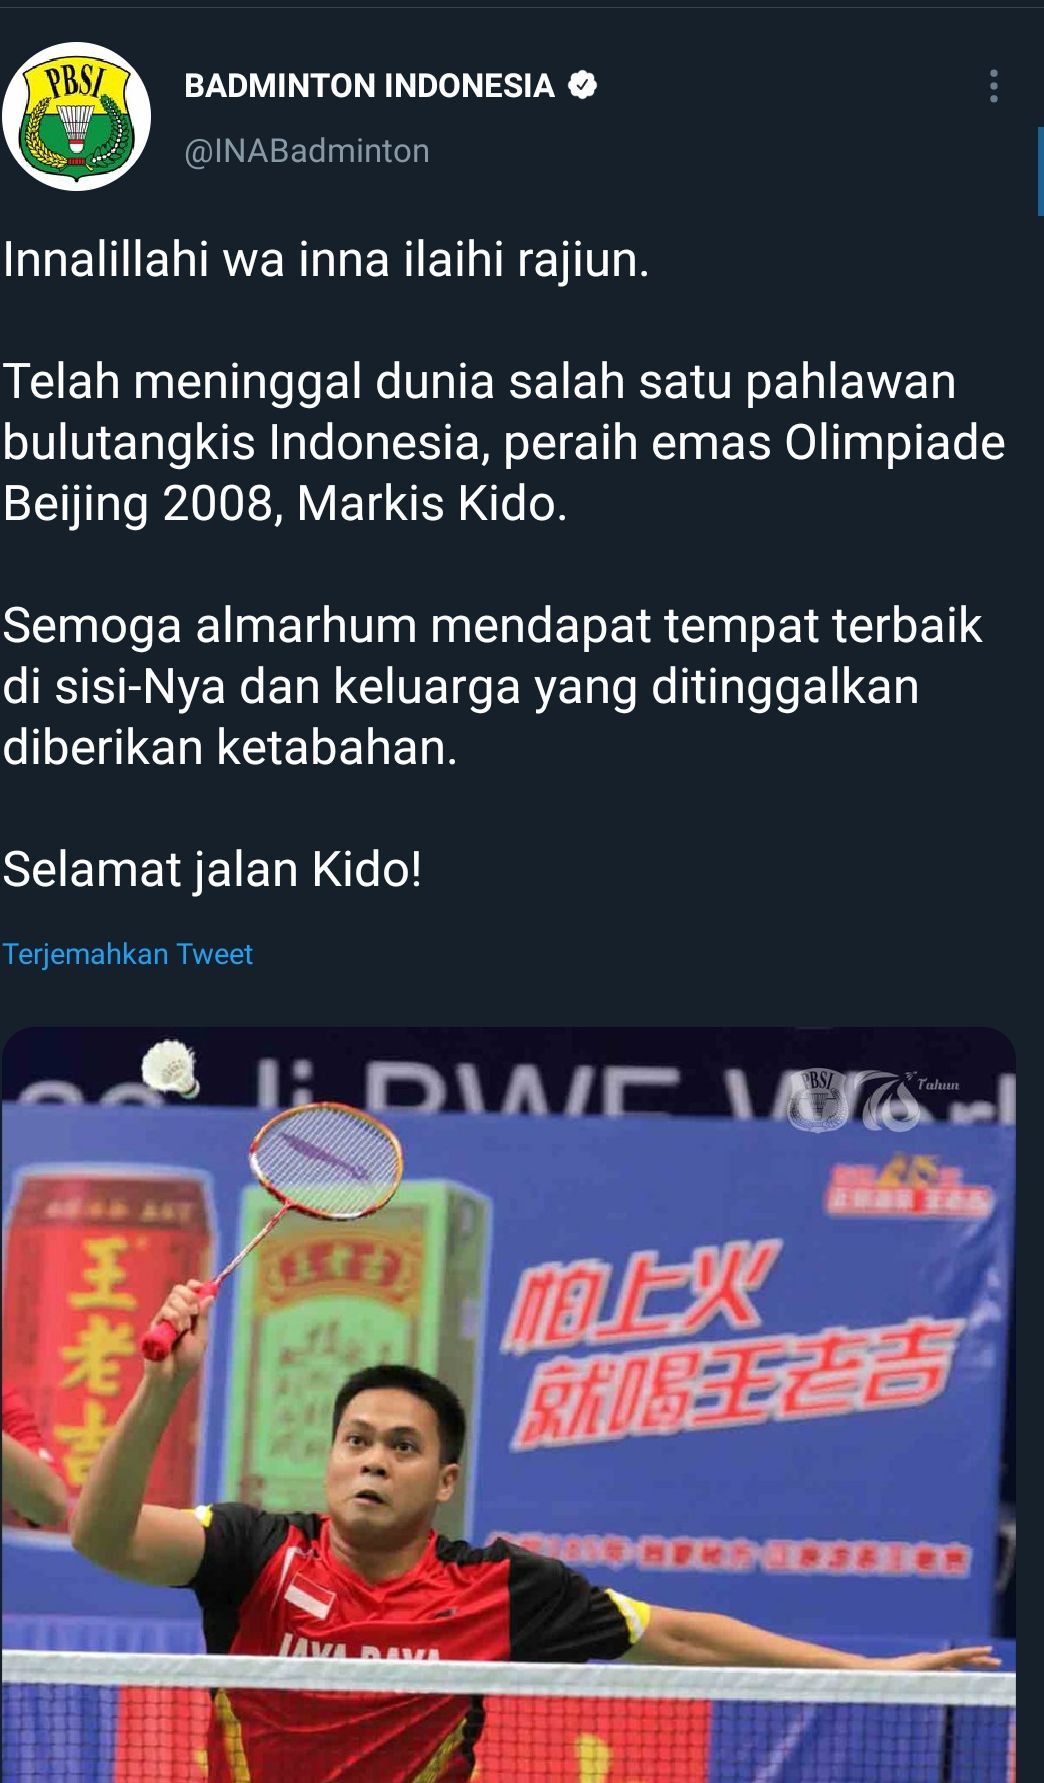 Unggahan akun Twitter Badminton Indonesia mengenai kabar meninggalnya Markis Kido